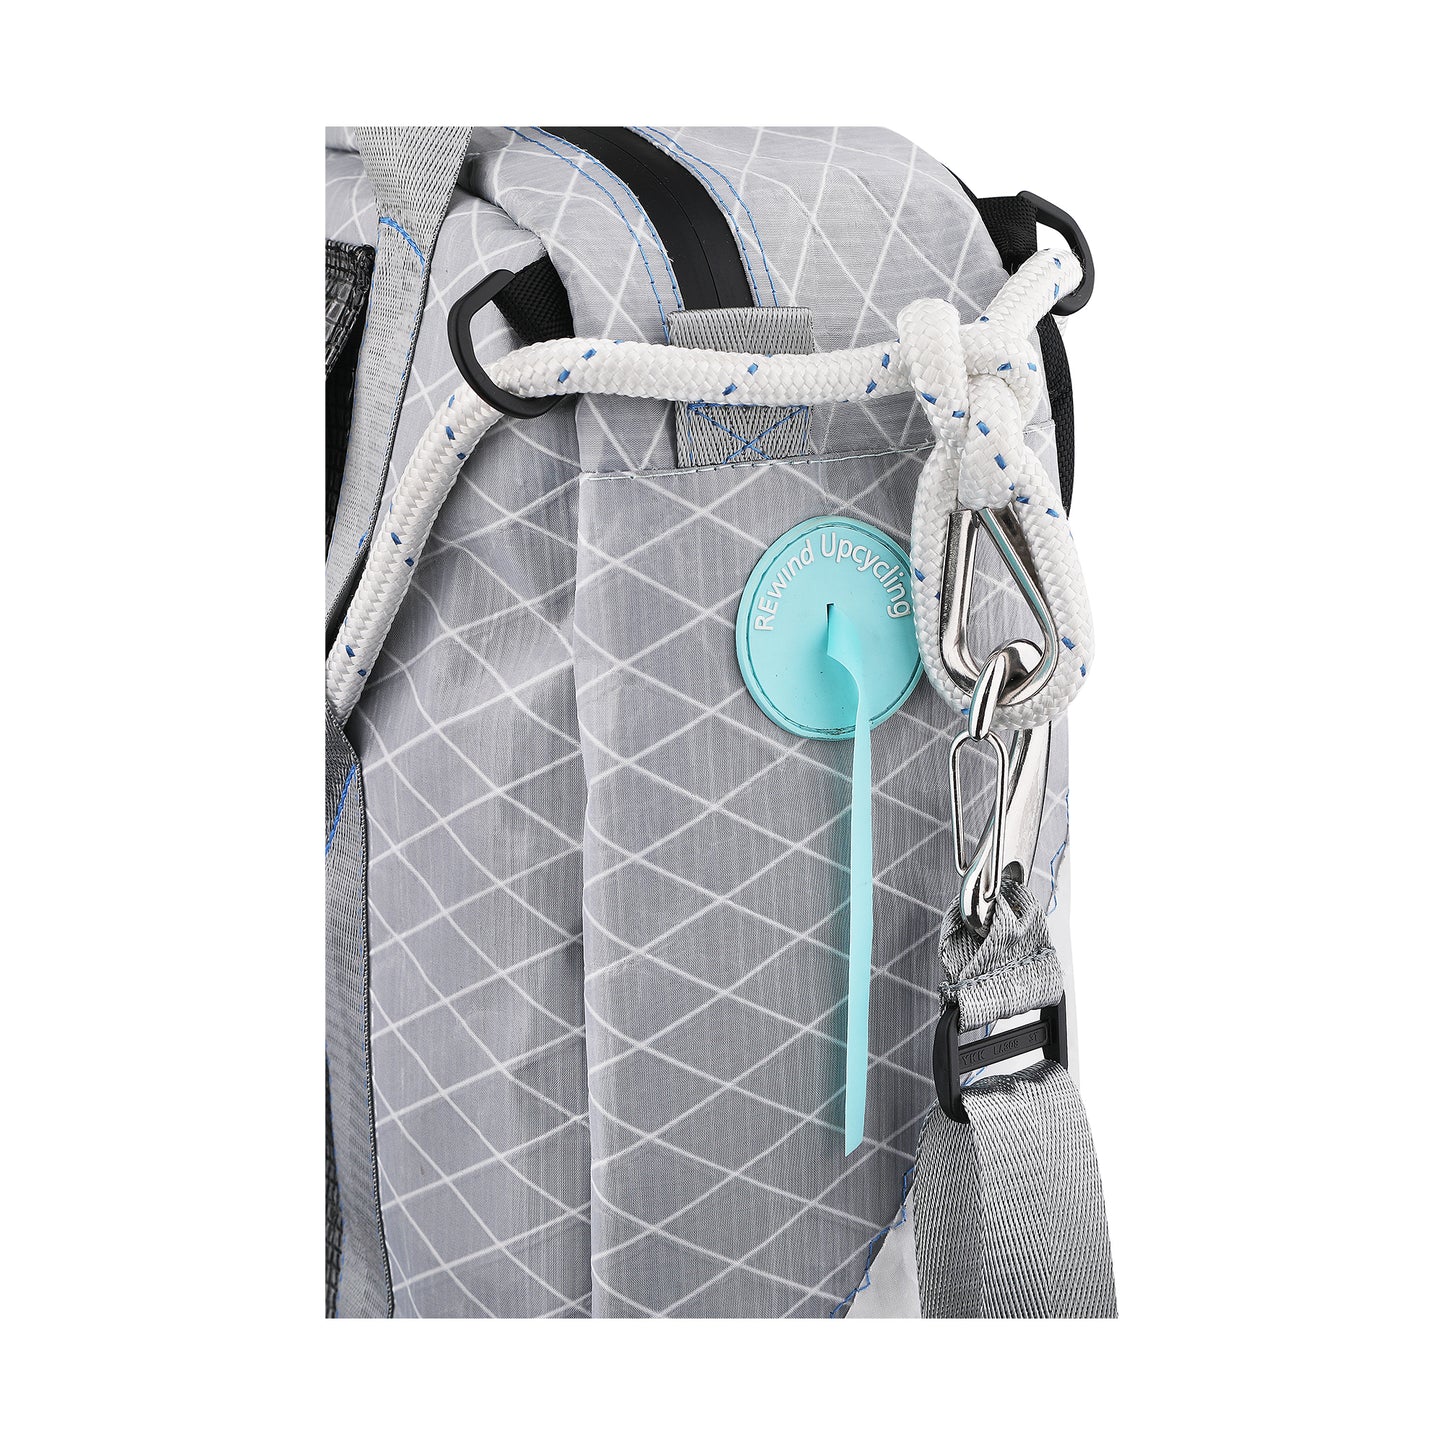 Designer cross body handbag-backpack from REwind brand